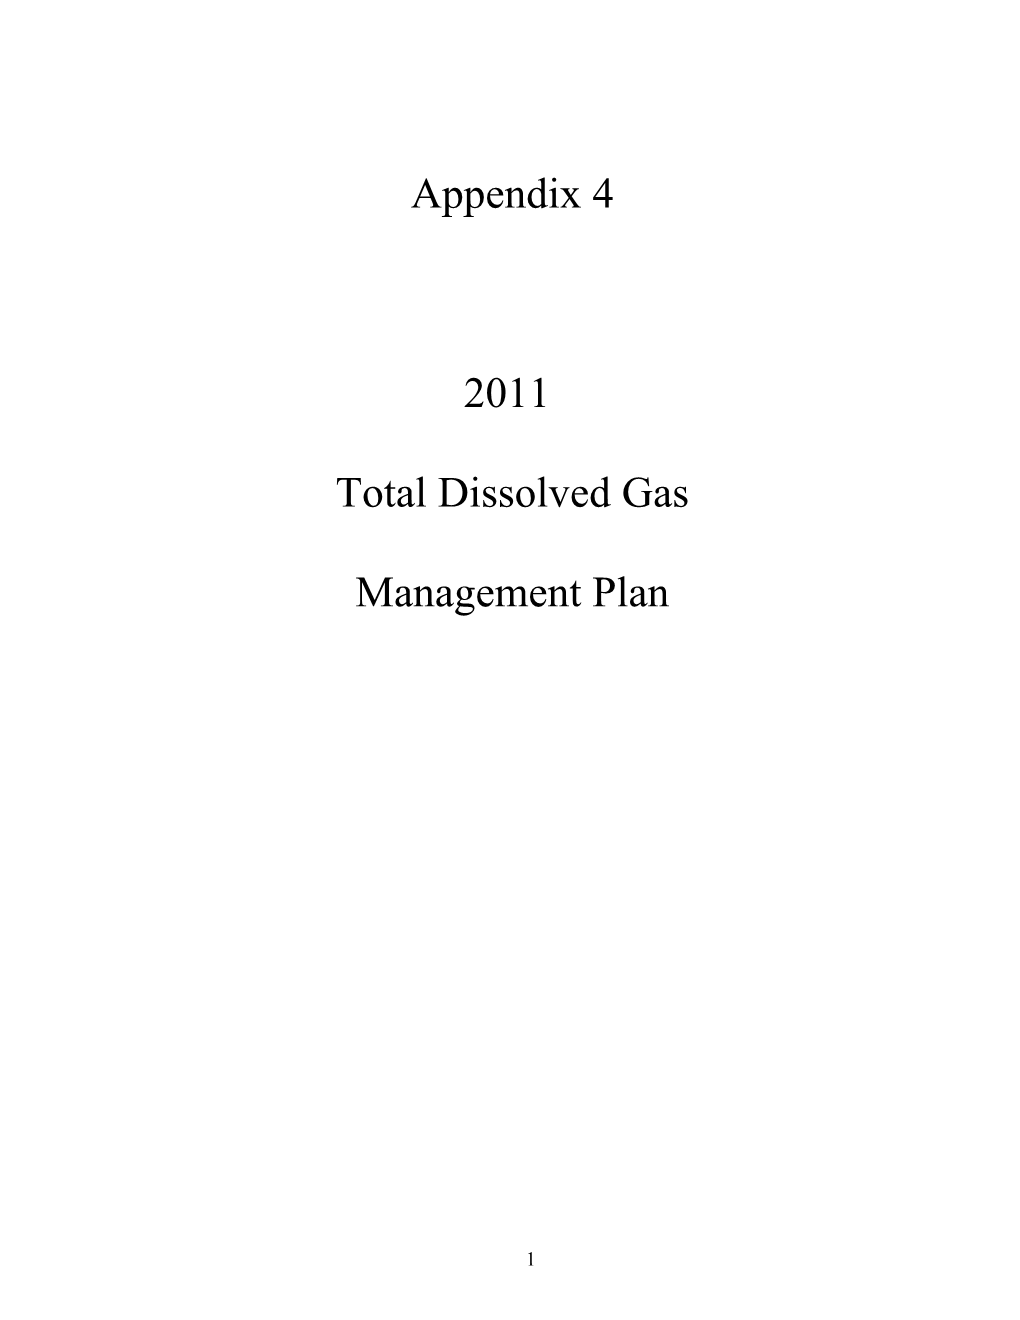 2003 Total Dissolved Gas Management Plan